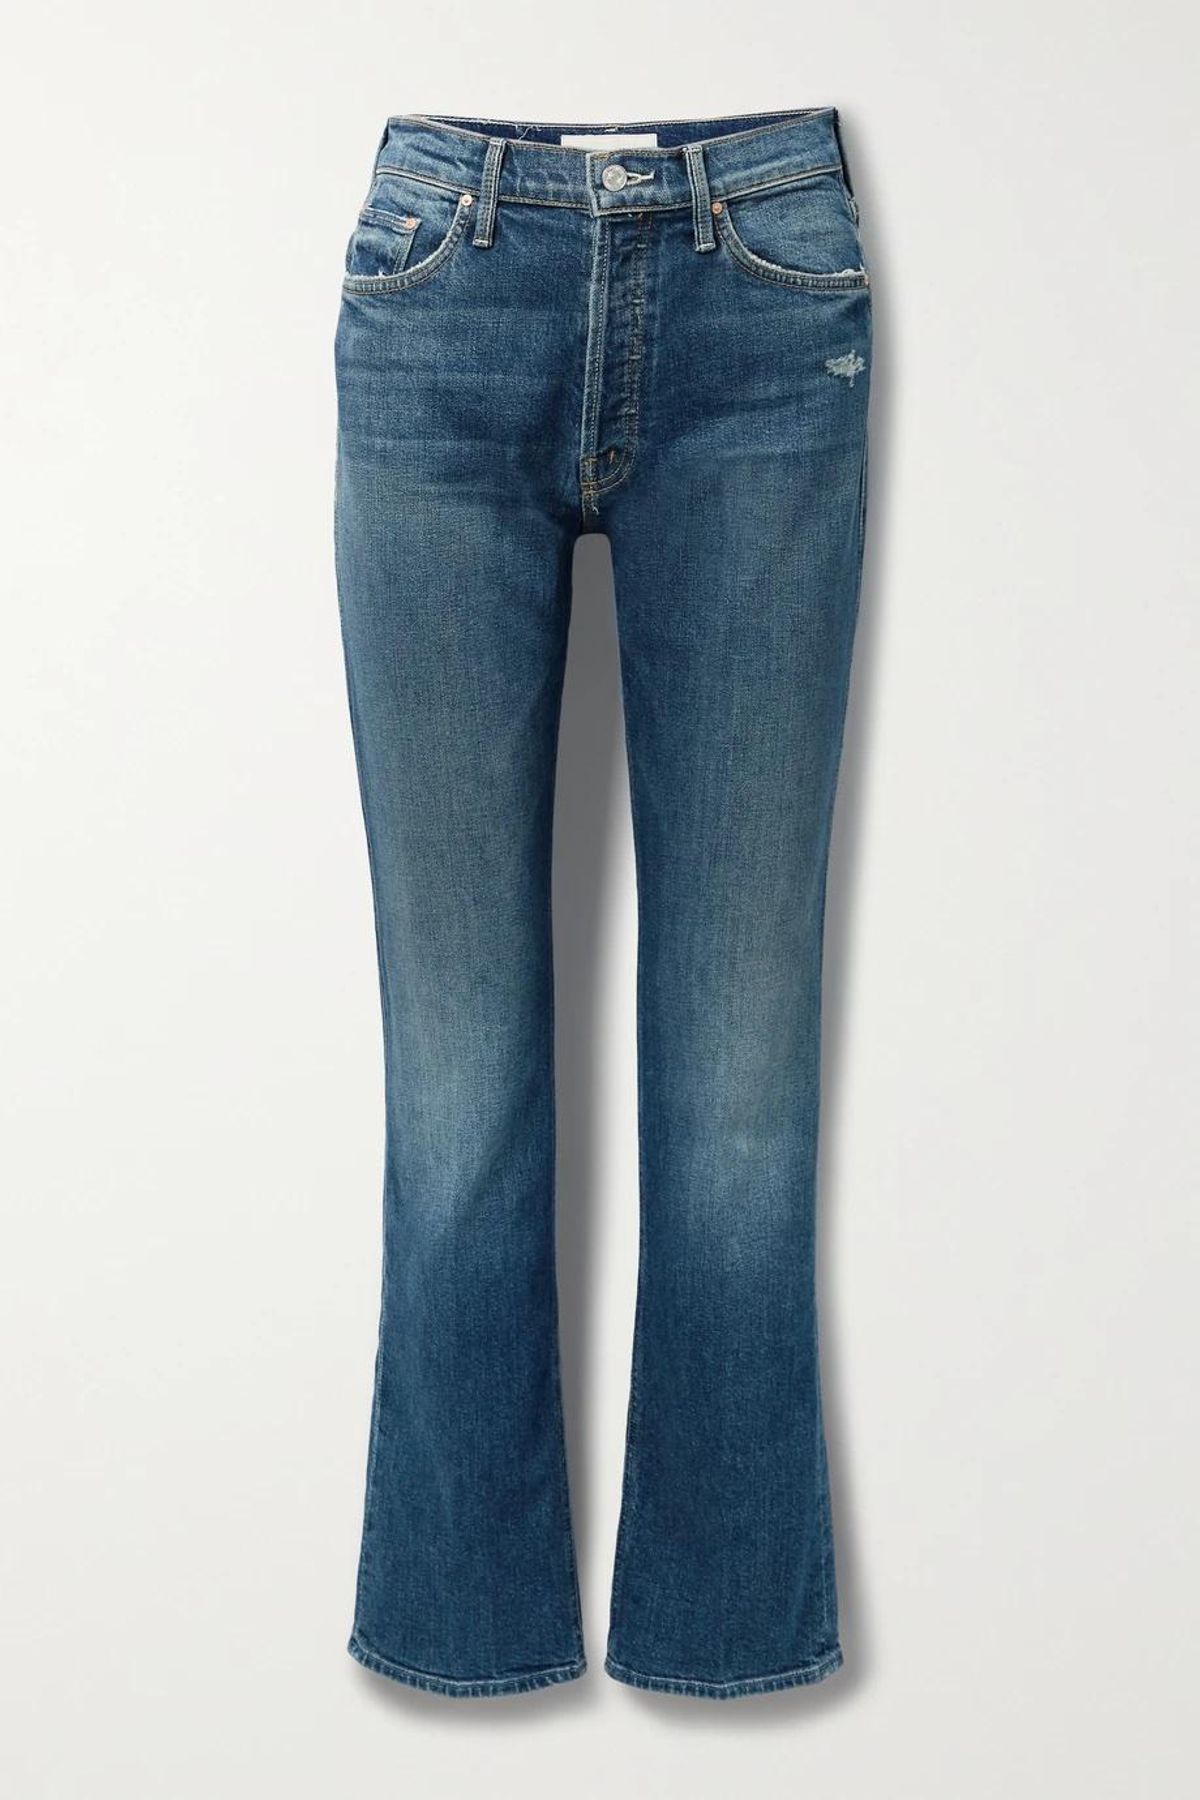 The Tripper Sneak High-Rise Straight-Leg Jeans